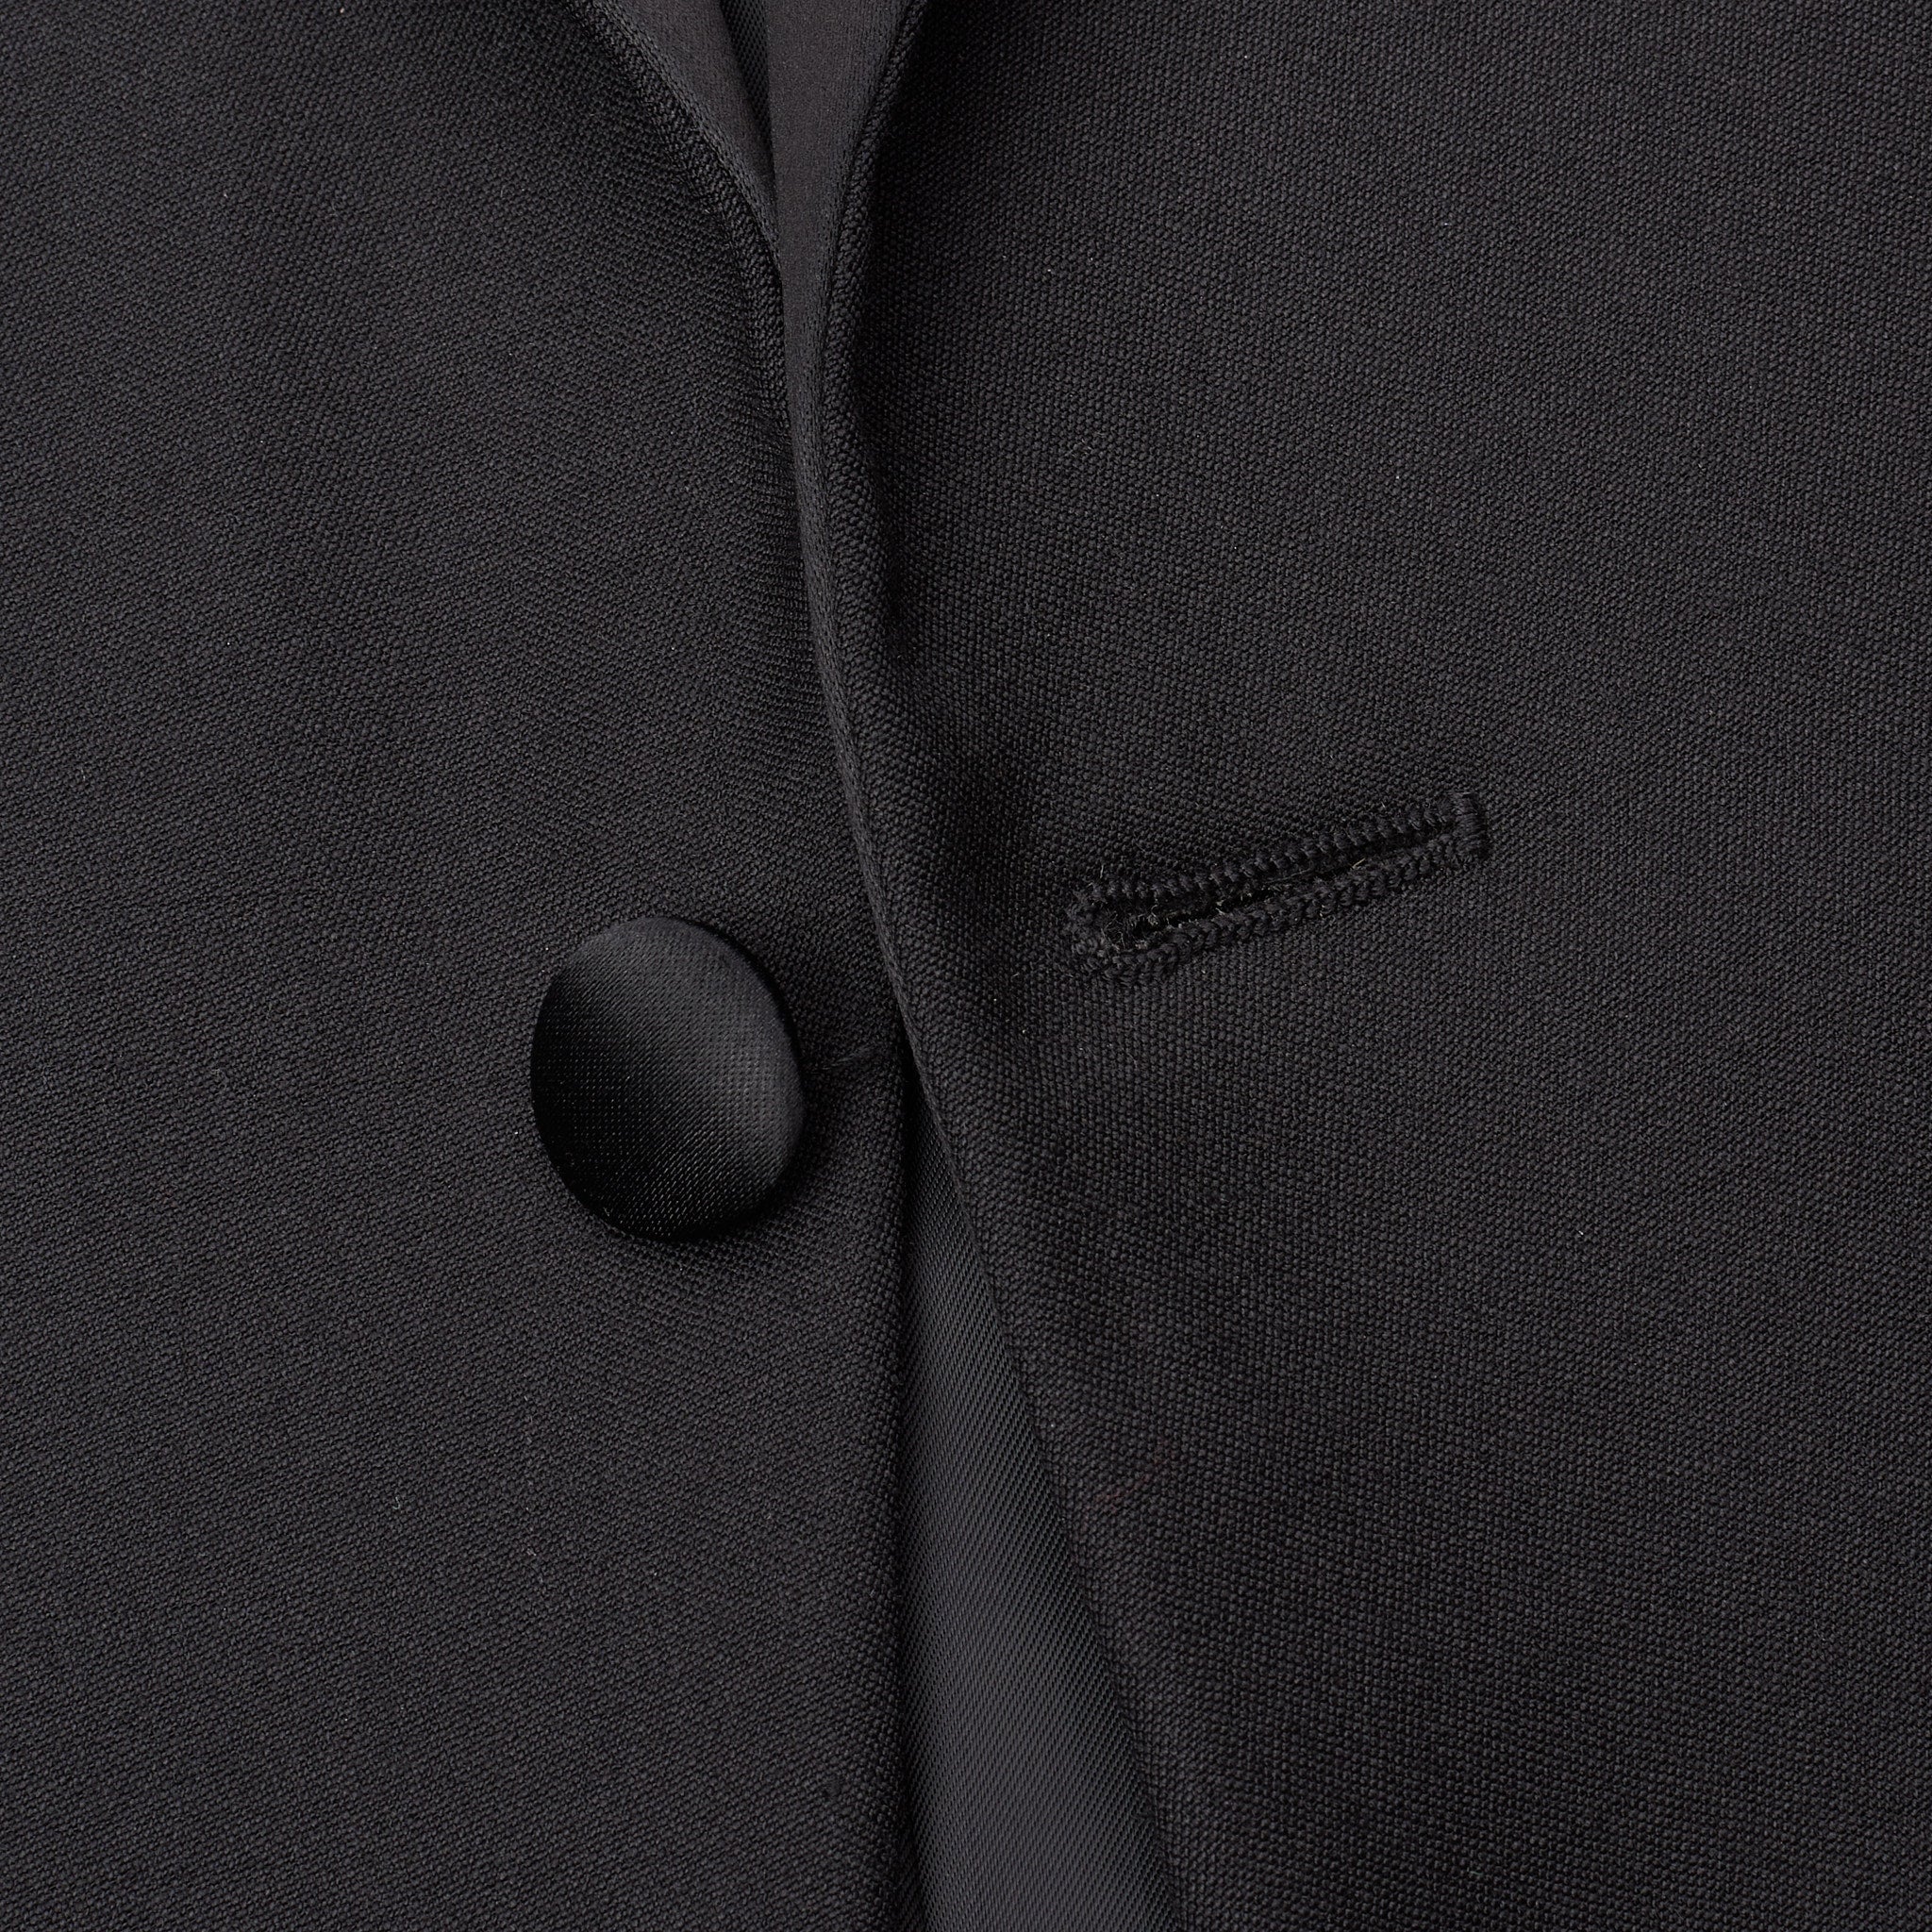 RAFFAELE CARUSO Black Wool 1 Button Peak Lapel Smoking Suit EU 50 US 40 RAFFAELE CARUSO